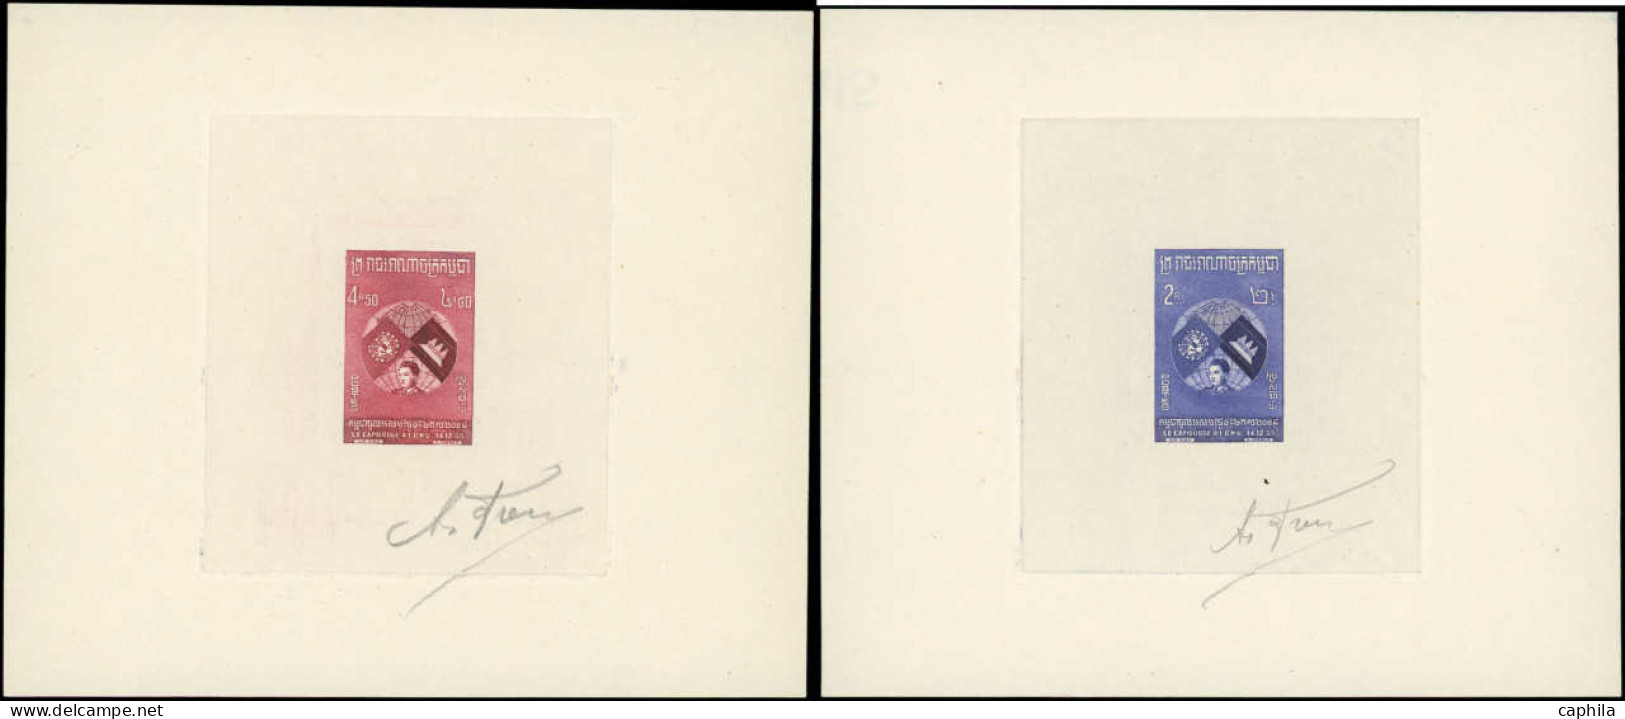 EPA CAMBODGE - Poste - 63 (bleu + 64 (carmin) + 65 (noir), 3 épreuves D'artiste Signées: ONU 1957 - Cambodia